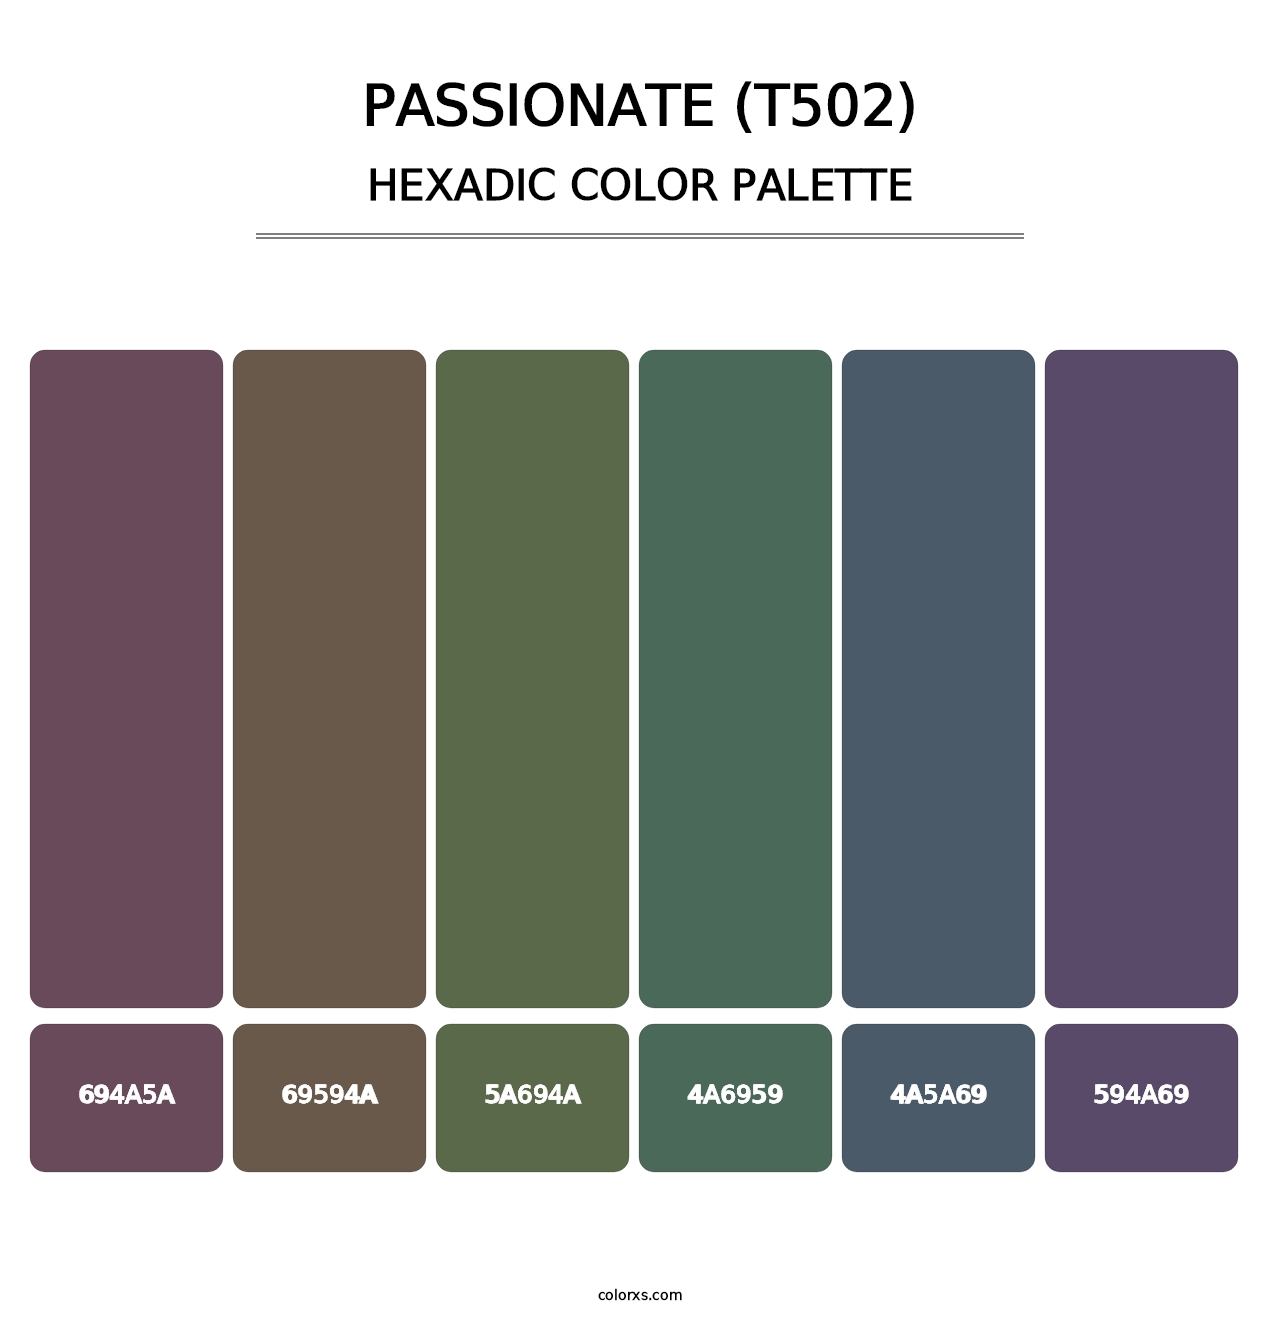 Passionate (T502) - Hexadic Color Palette